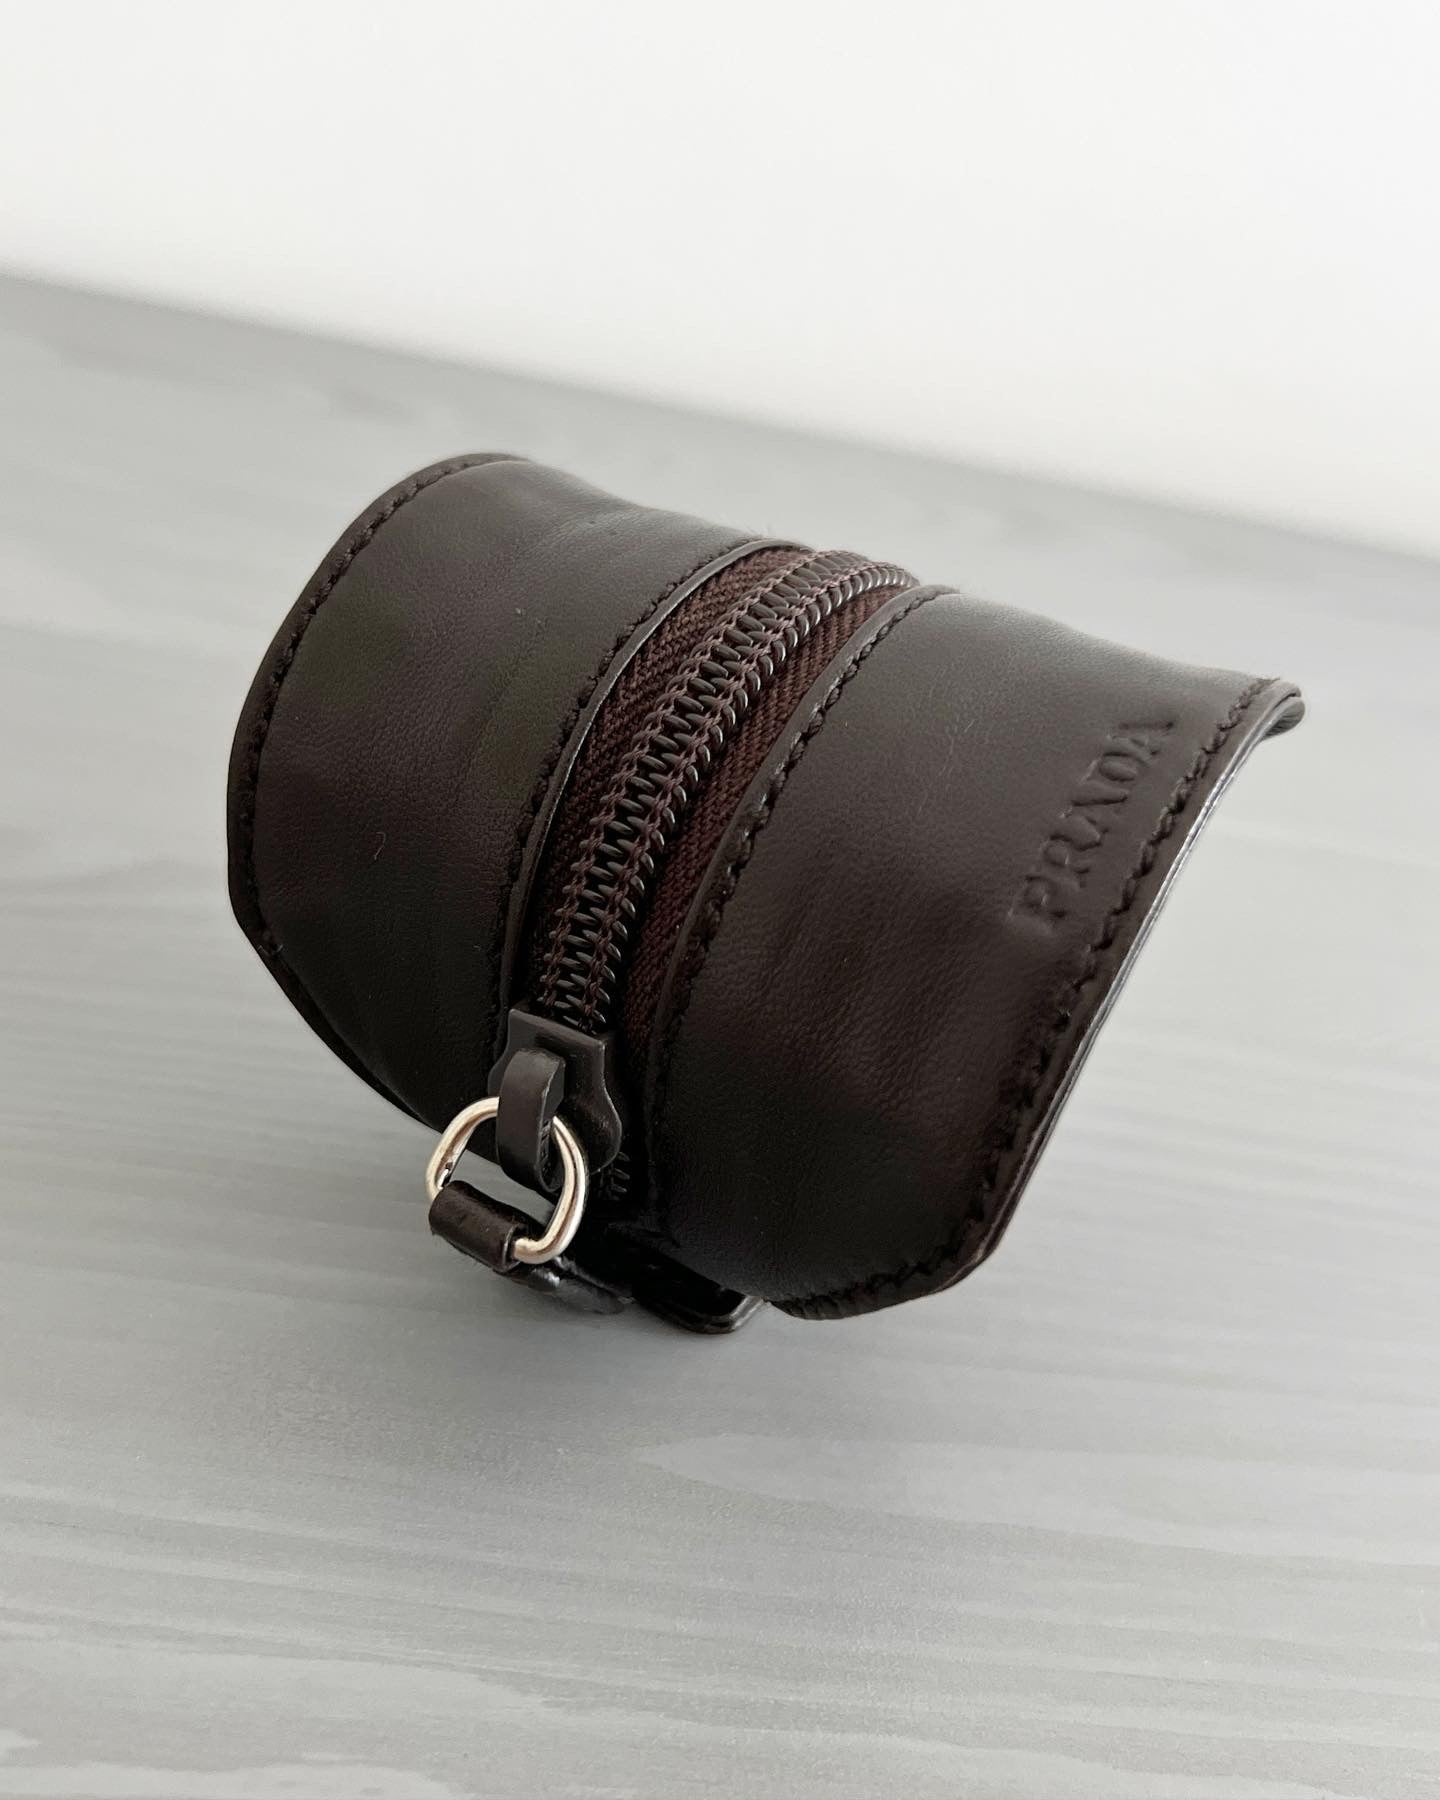 Prada Early 2000s Leather Wrist-Bag